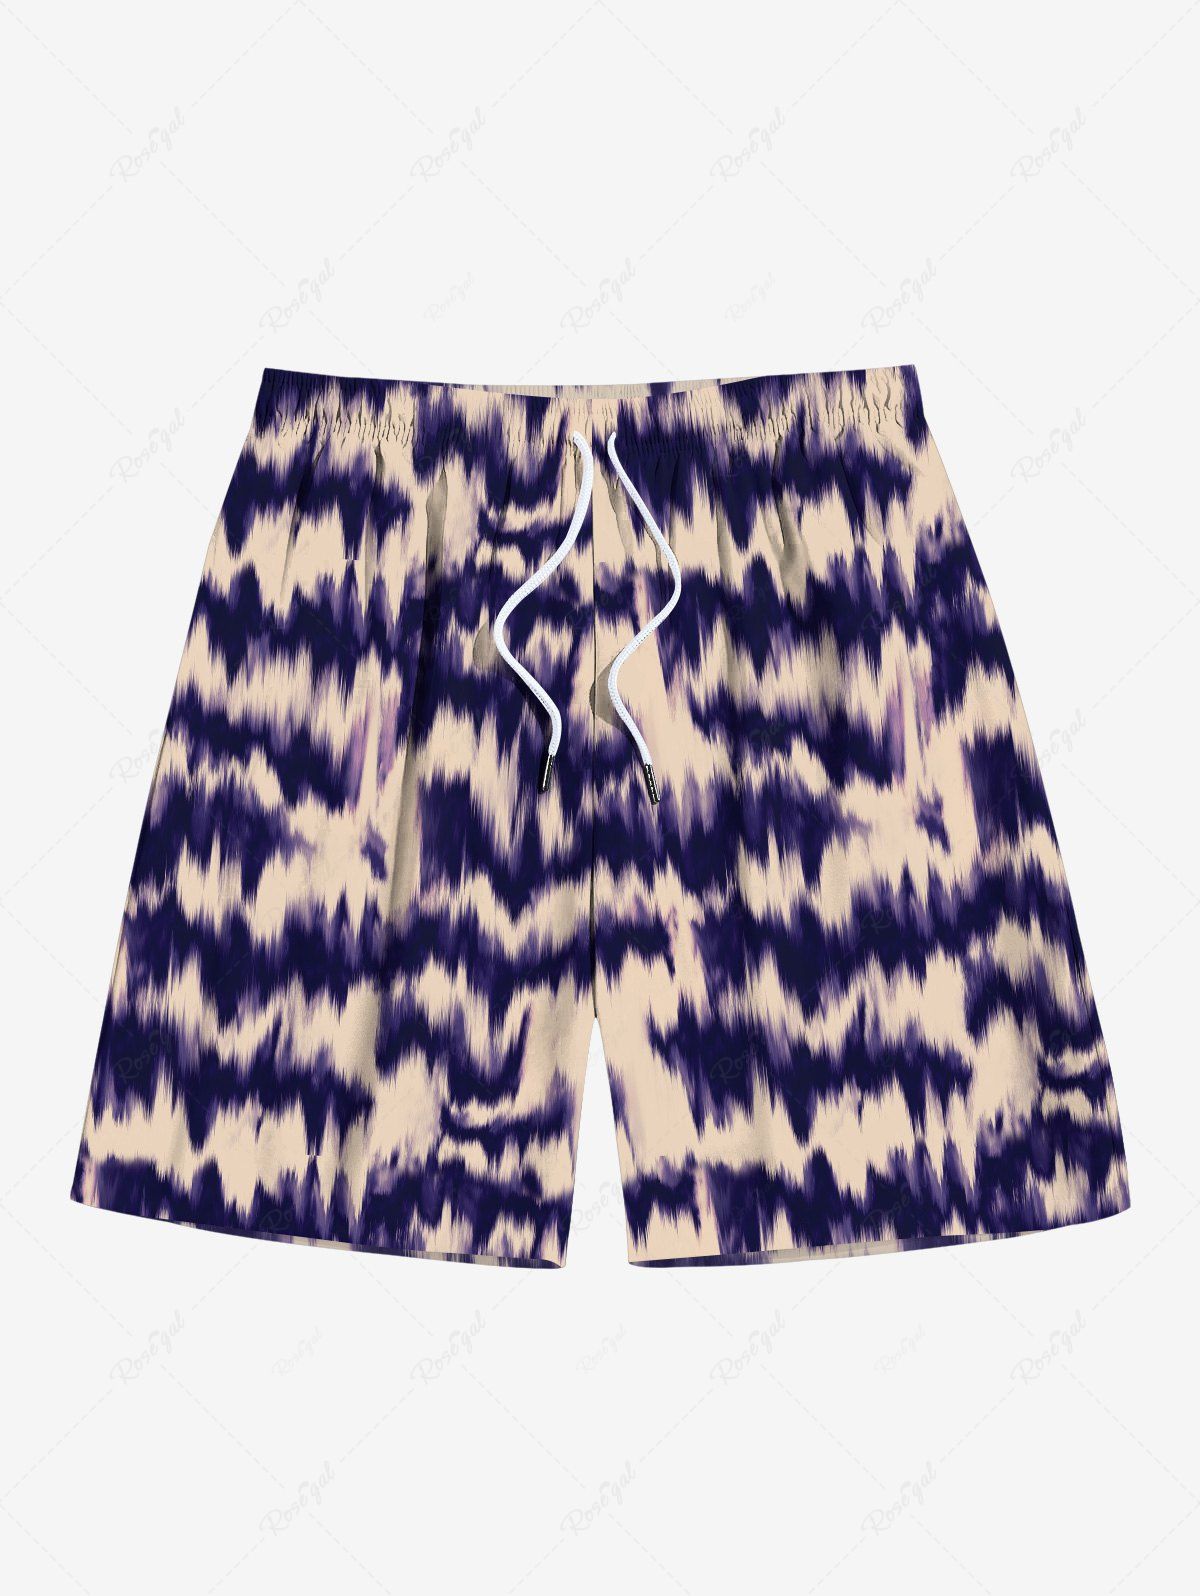 Buy Men's Vacation Style Streak Dye Colorblock Print Beach Shorts  